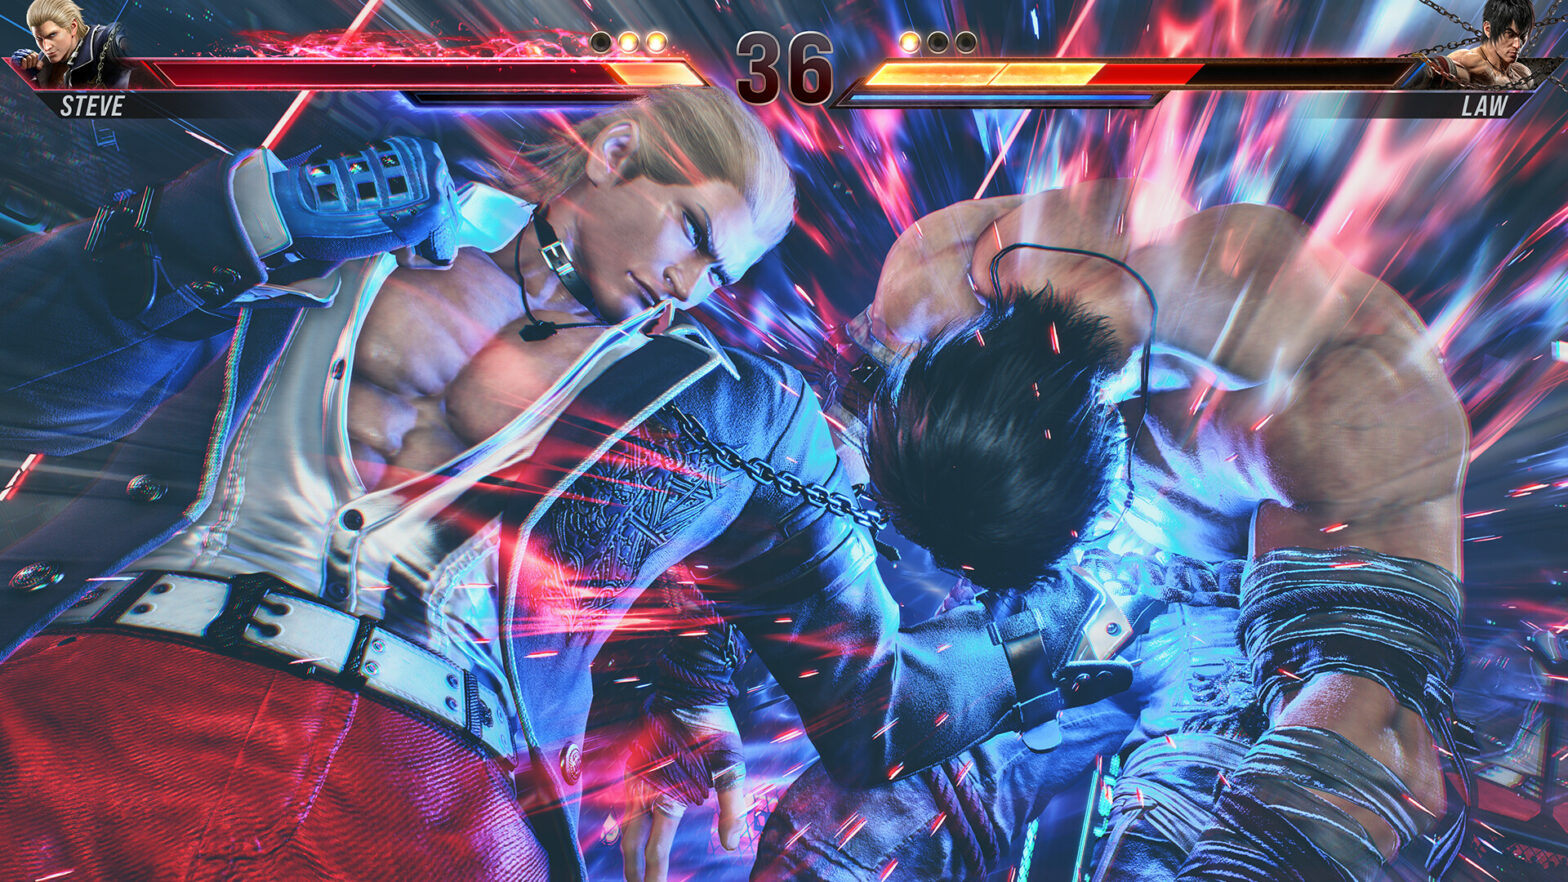 How to play Tekken 8 Demo: Release date, platforms, content, more